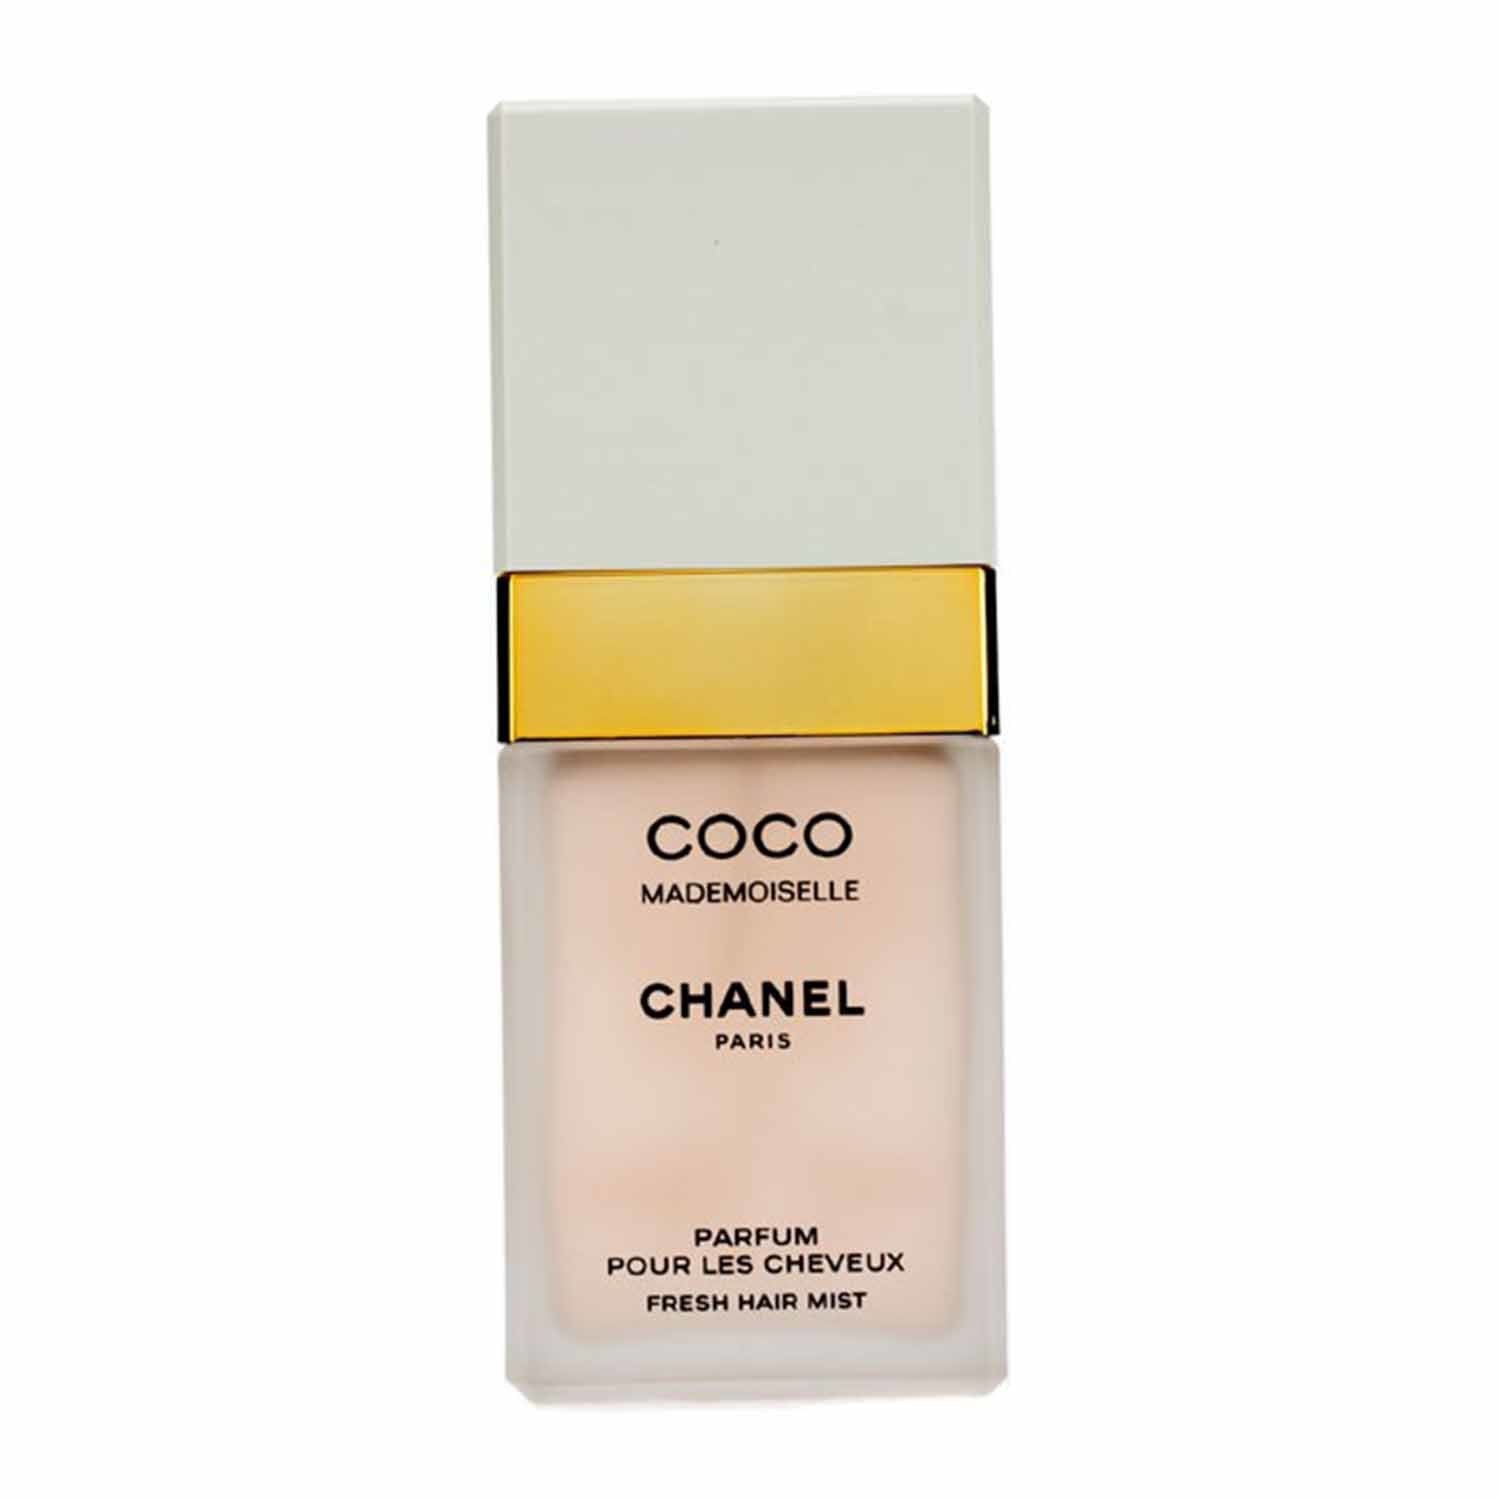 Chanel Coco Mademoiselle for Women Parfum 35ml Cheveux Hair Mist price in  Saudi Arabia,  Saudi Arabia